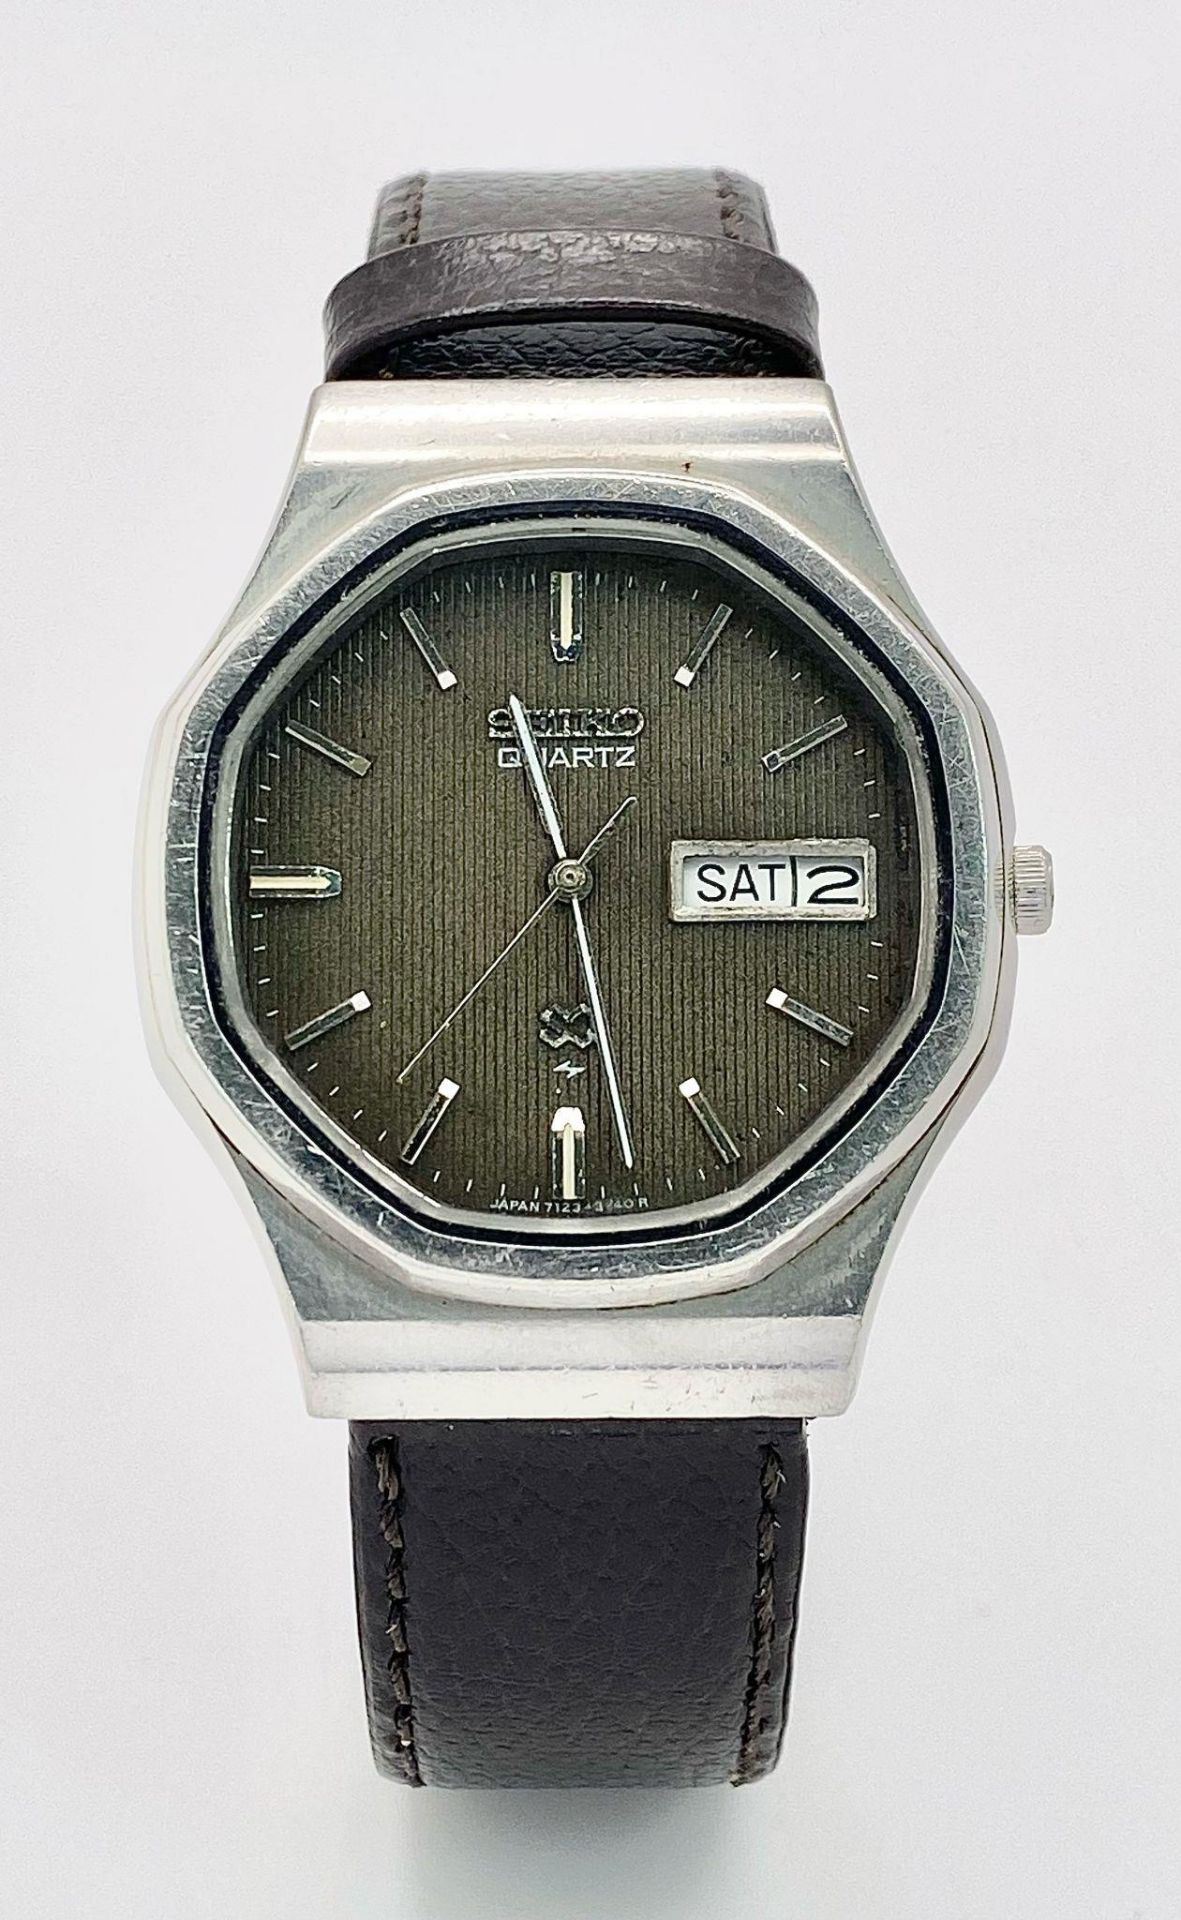 A Vintage Seiko Quartz Watch. Black leather strap. Octagonal case - 36mm. Grey dial with day/date - Bild 2 aus 7